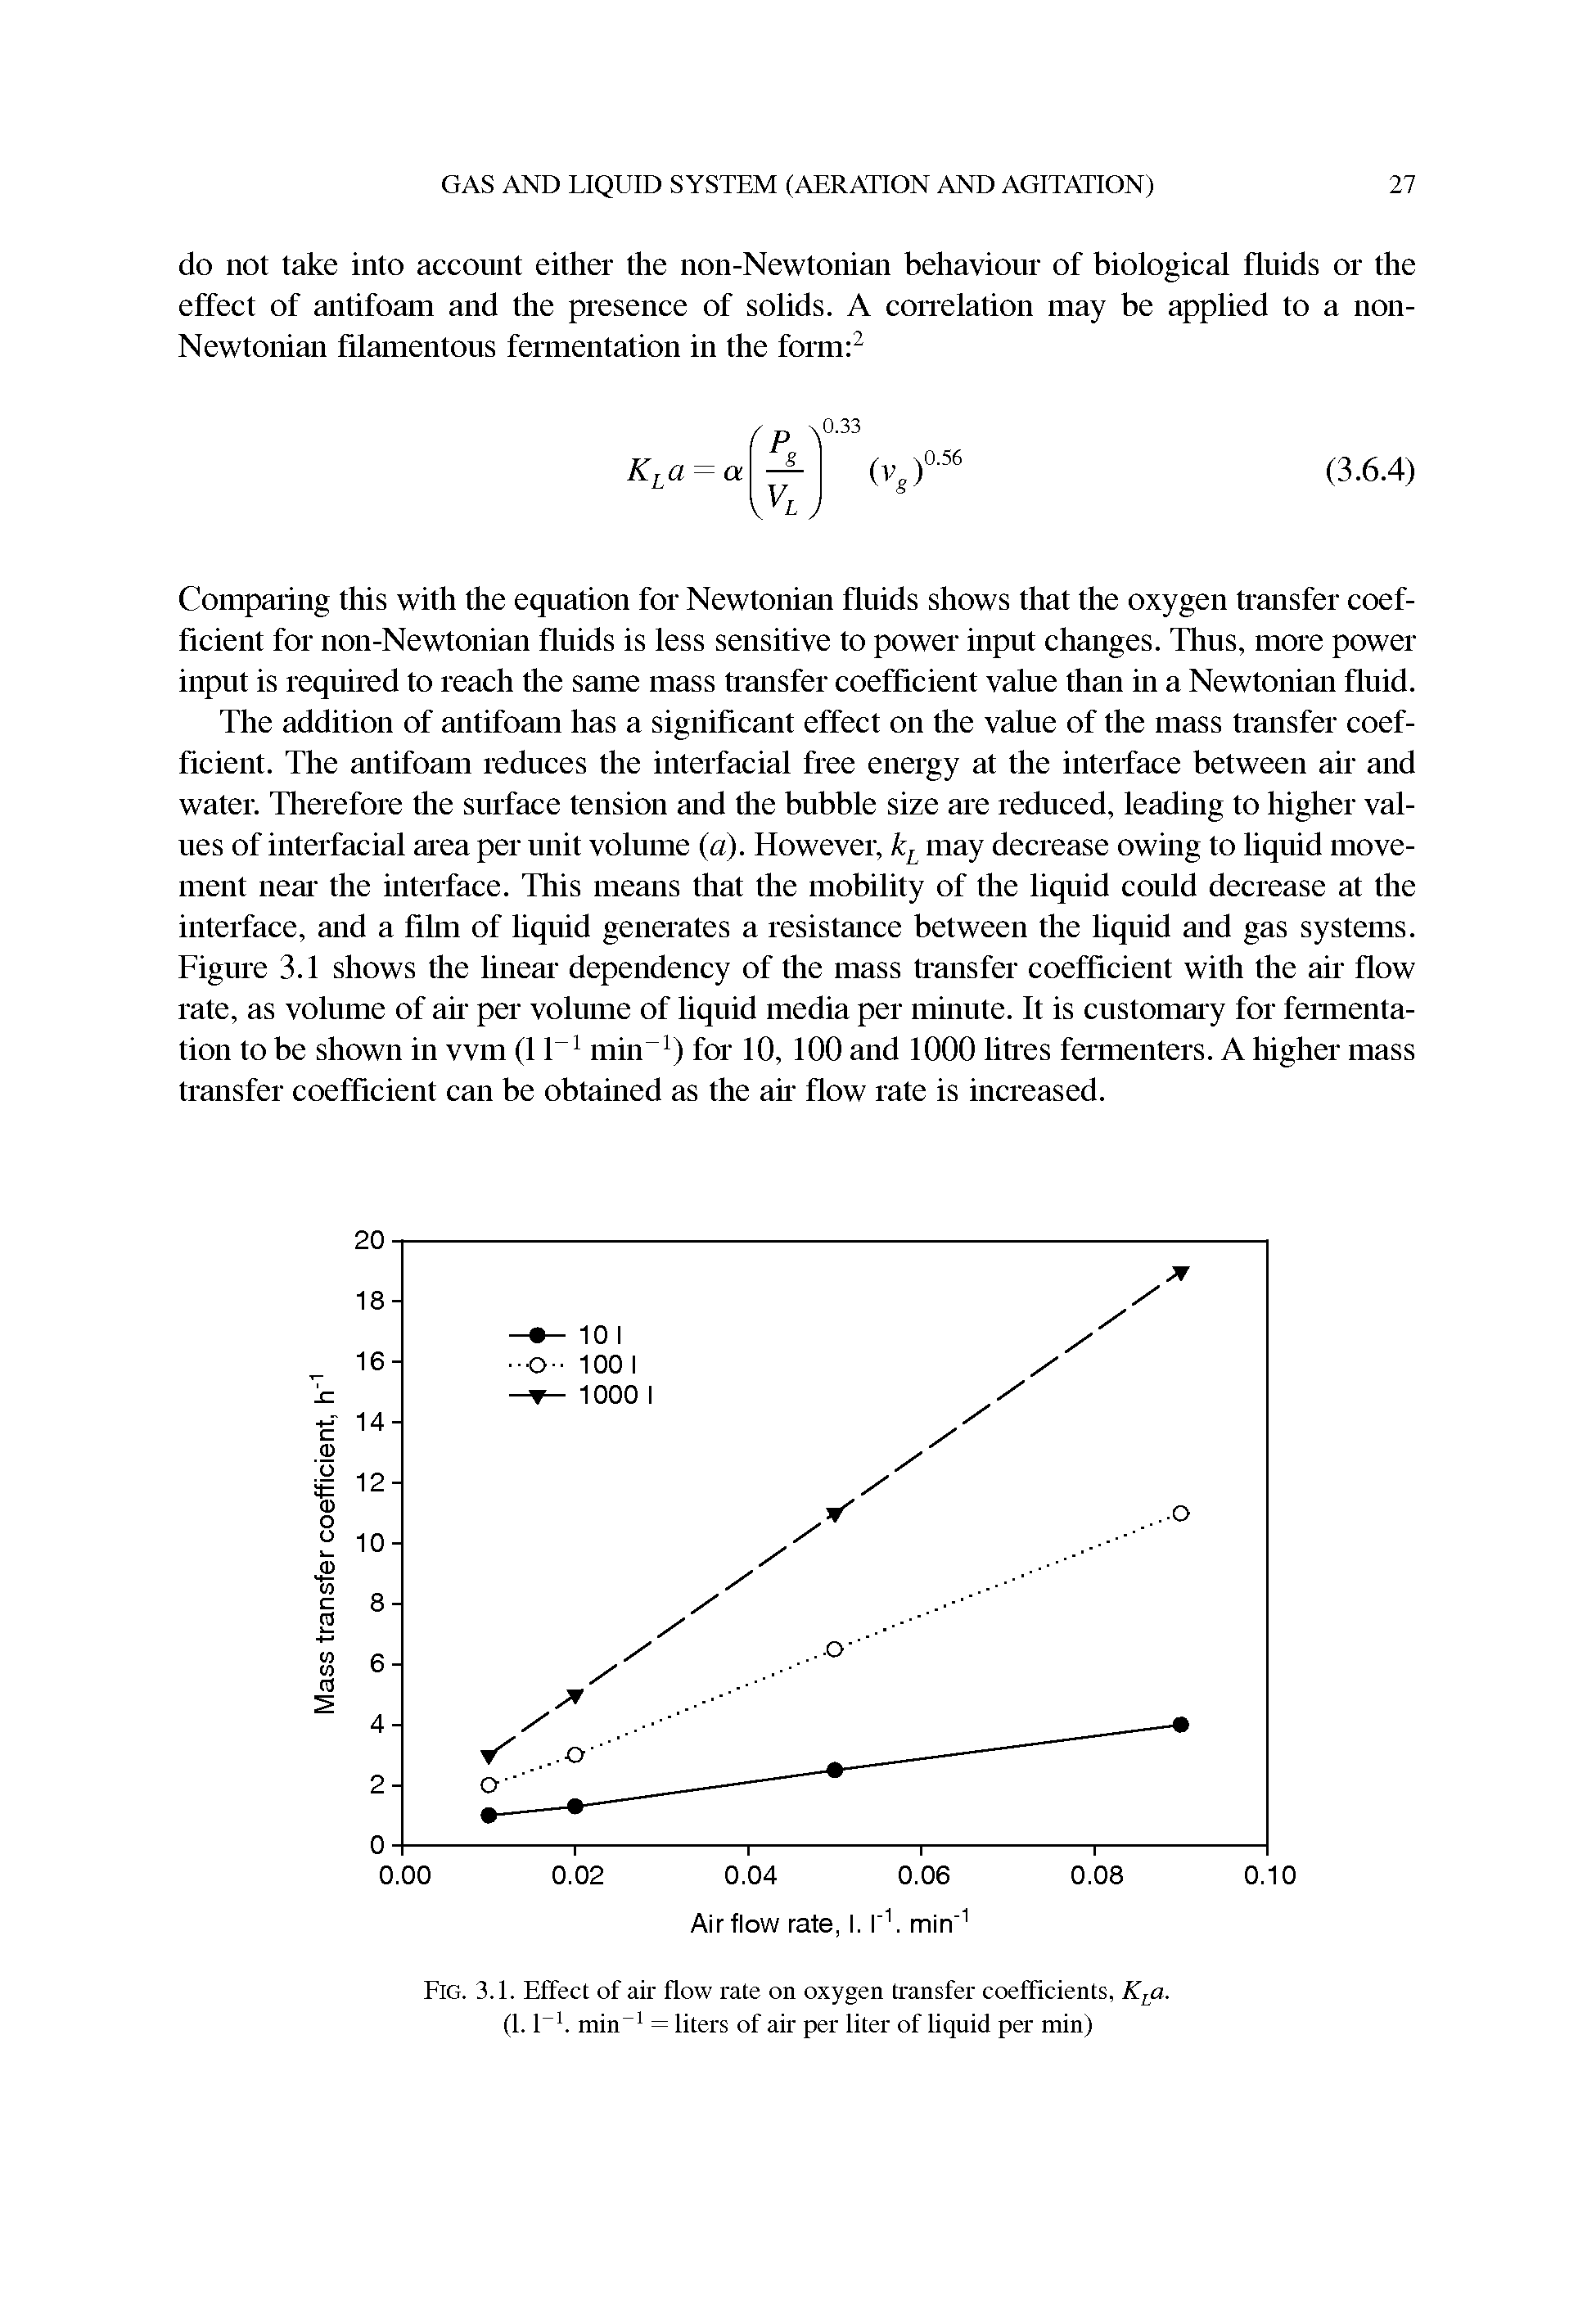 Fig. 3.1. Effect of air flow rate on oxygen transfer coefficients, KLa. (1.1-1. min-1 = liters of air per liter of liquid per min)...